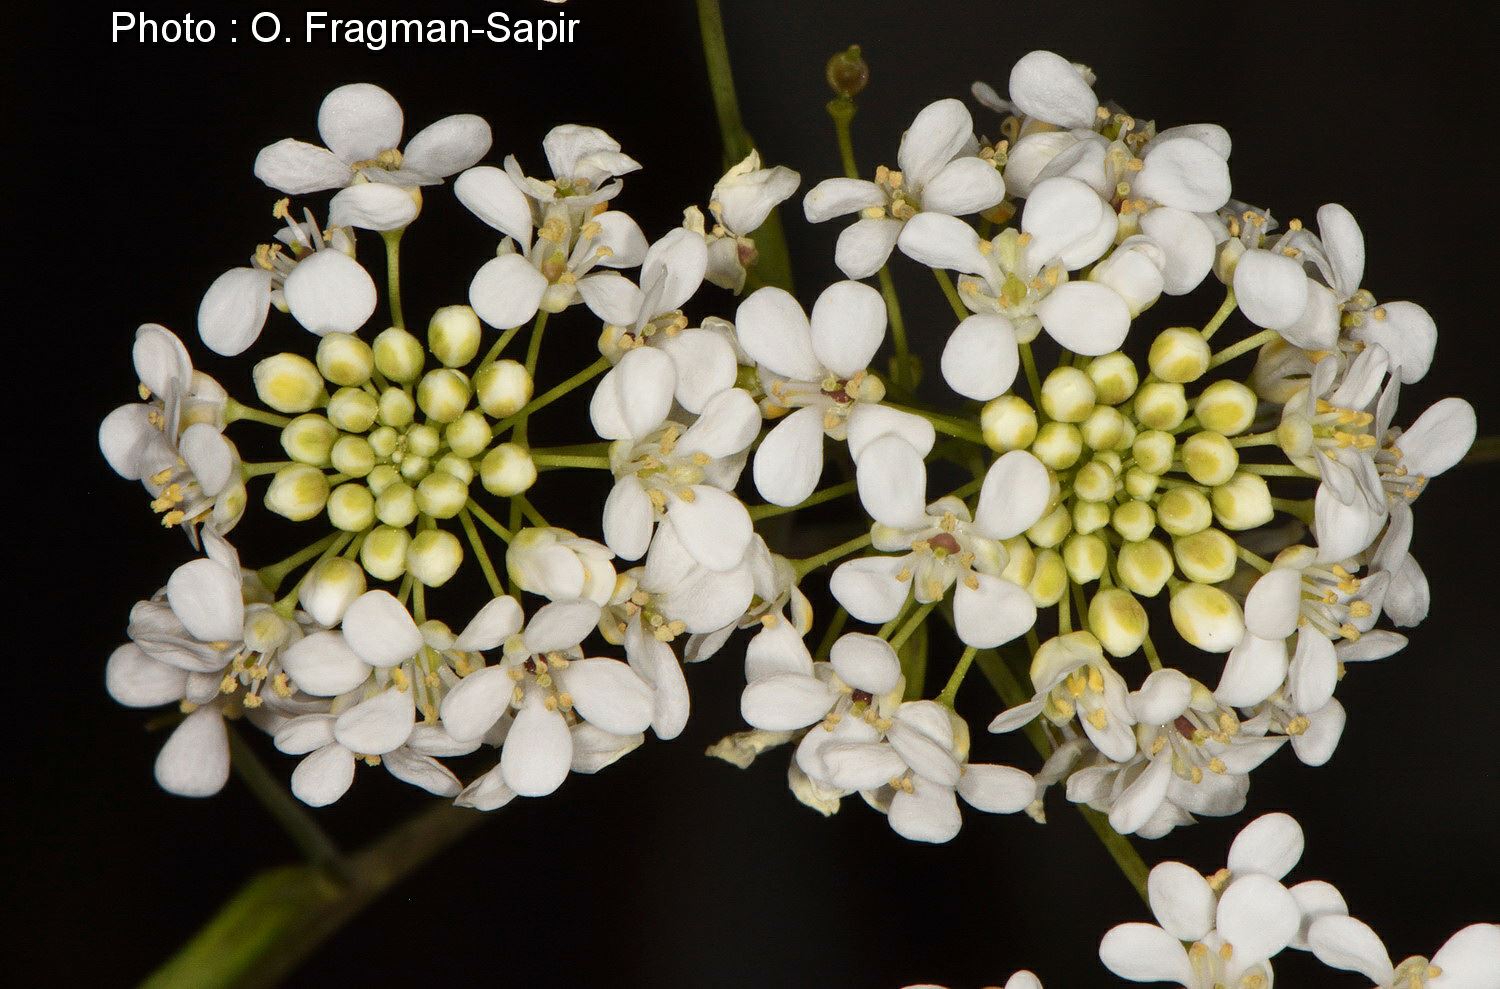 Peltaria angustifolia - Narrow-leaved Shieldwort, שלטה צרת-עלים, שלטה צרת-עלים